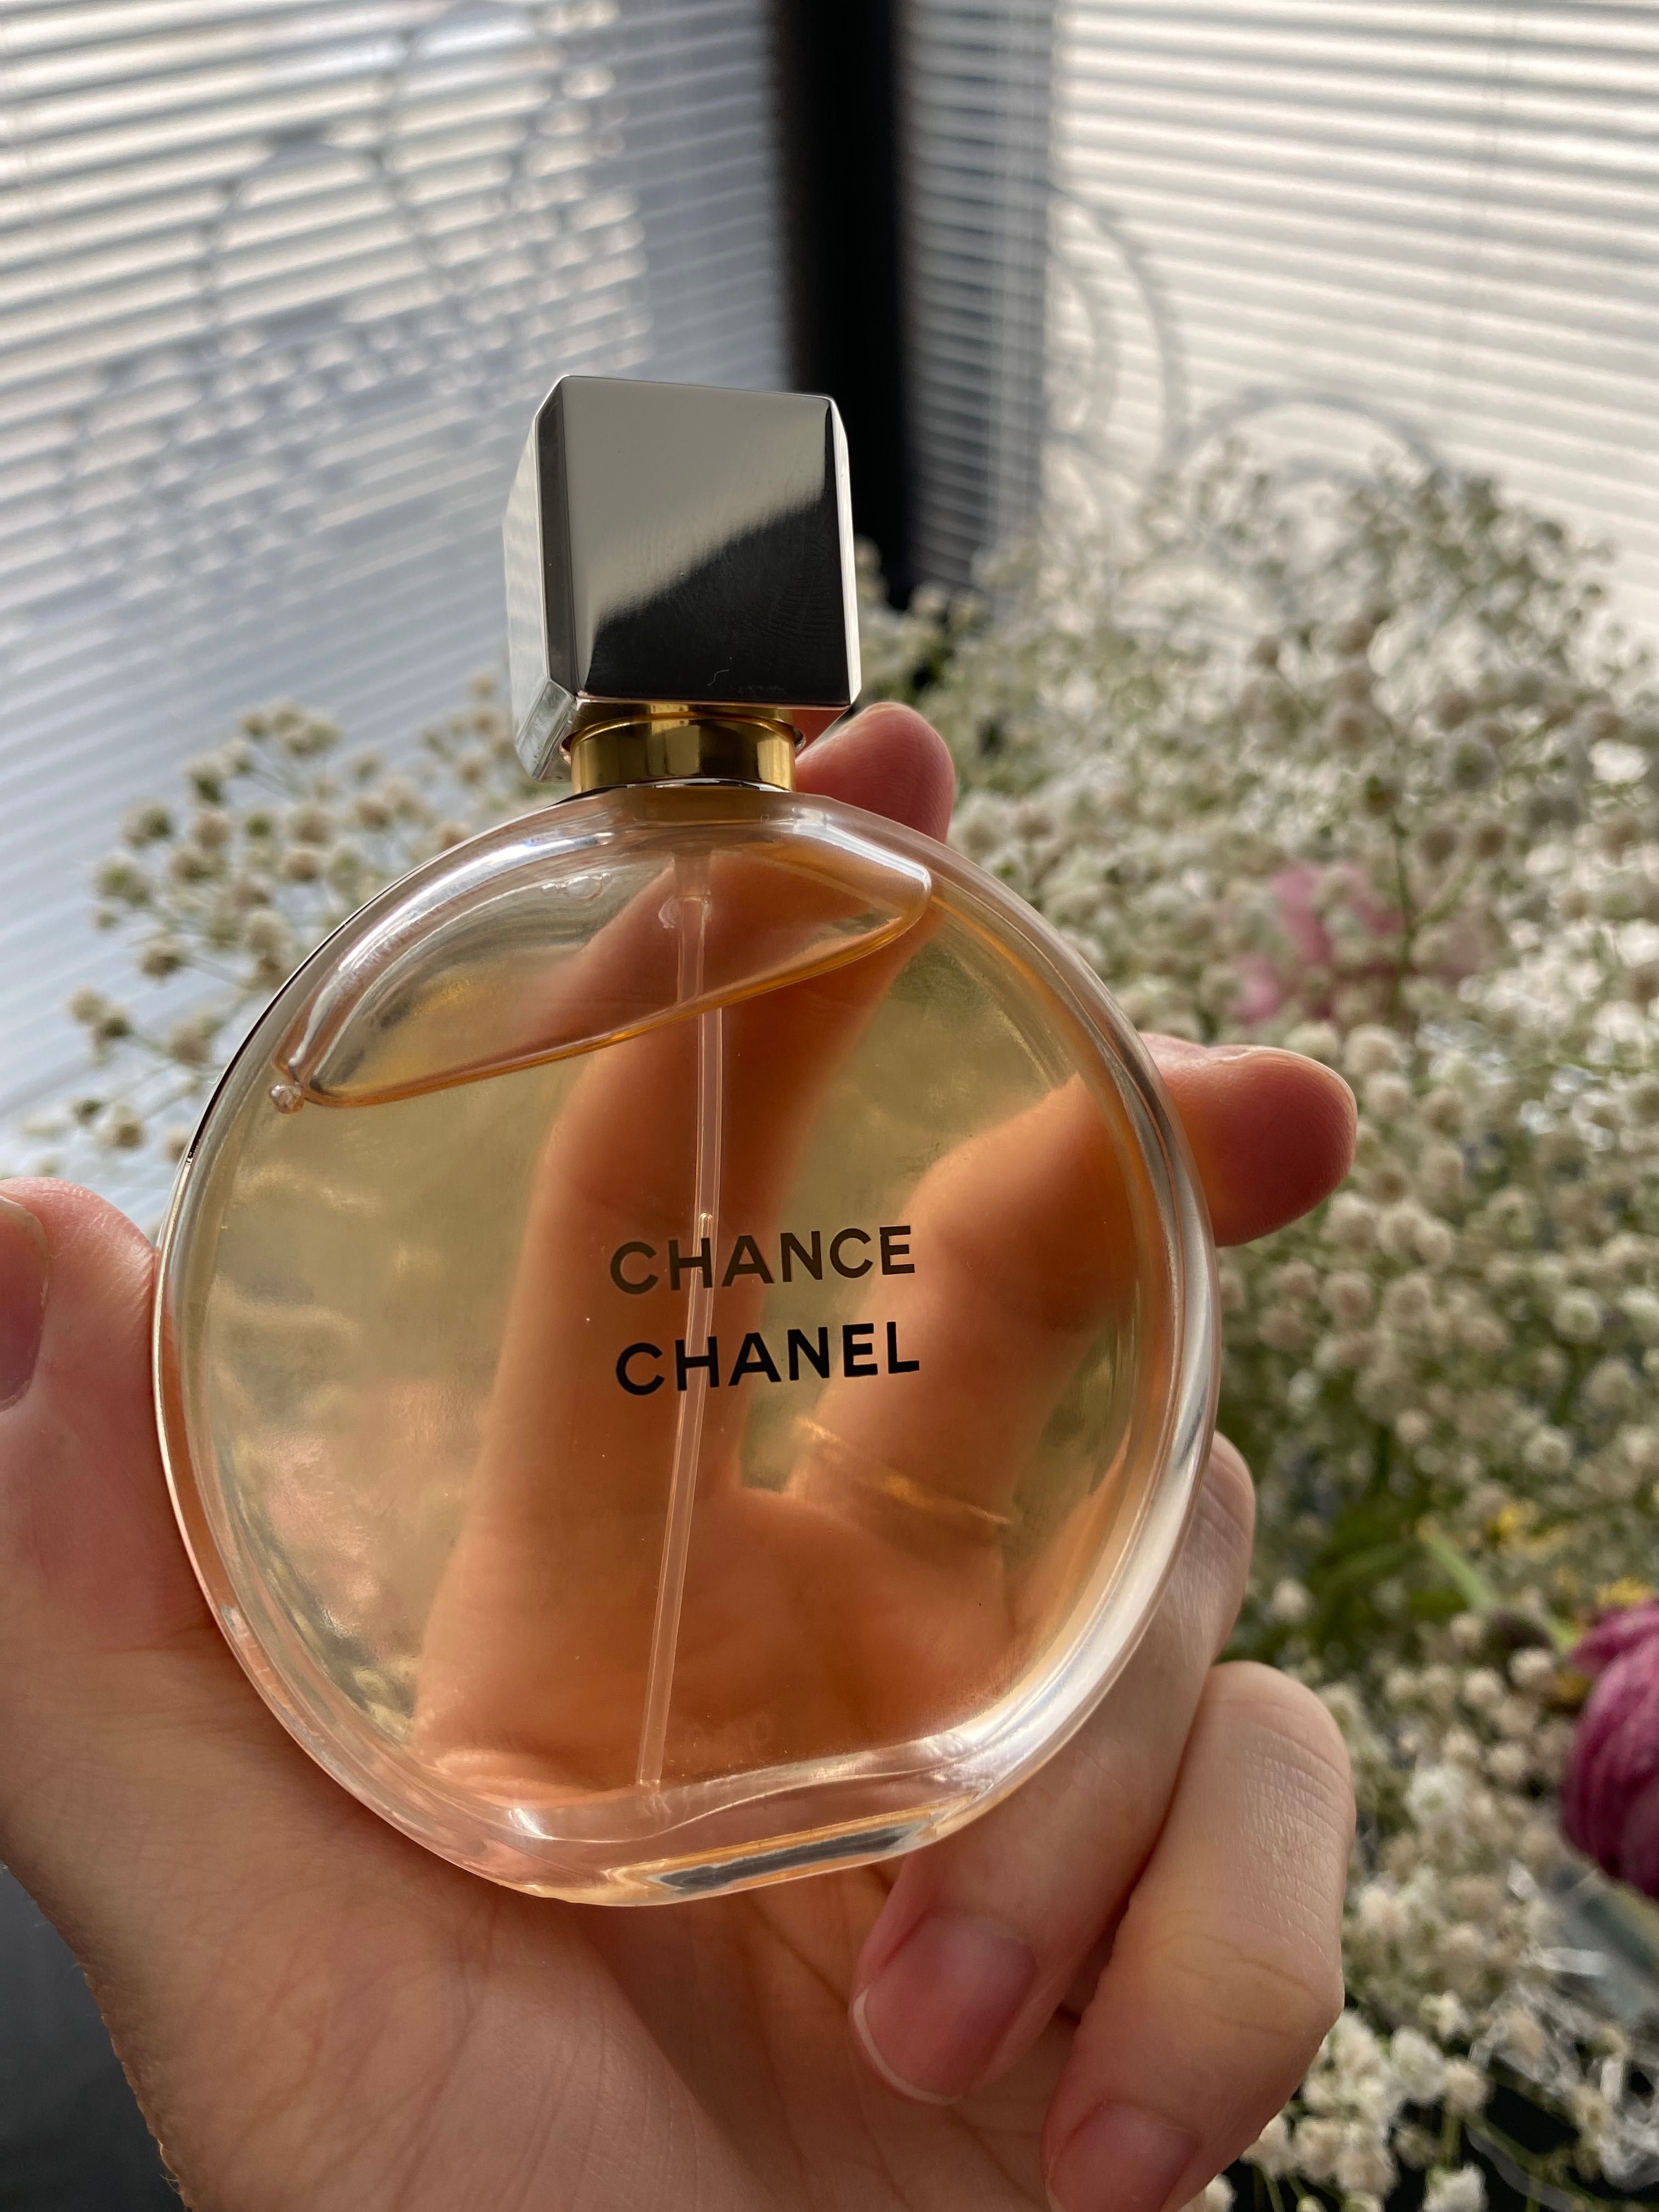 Chanel chance парфумована вода